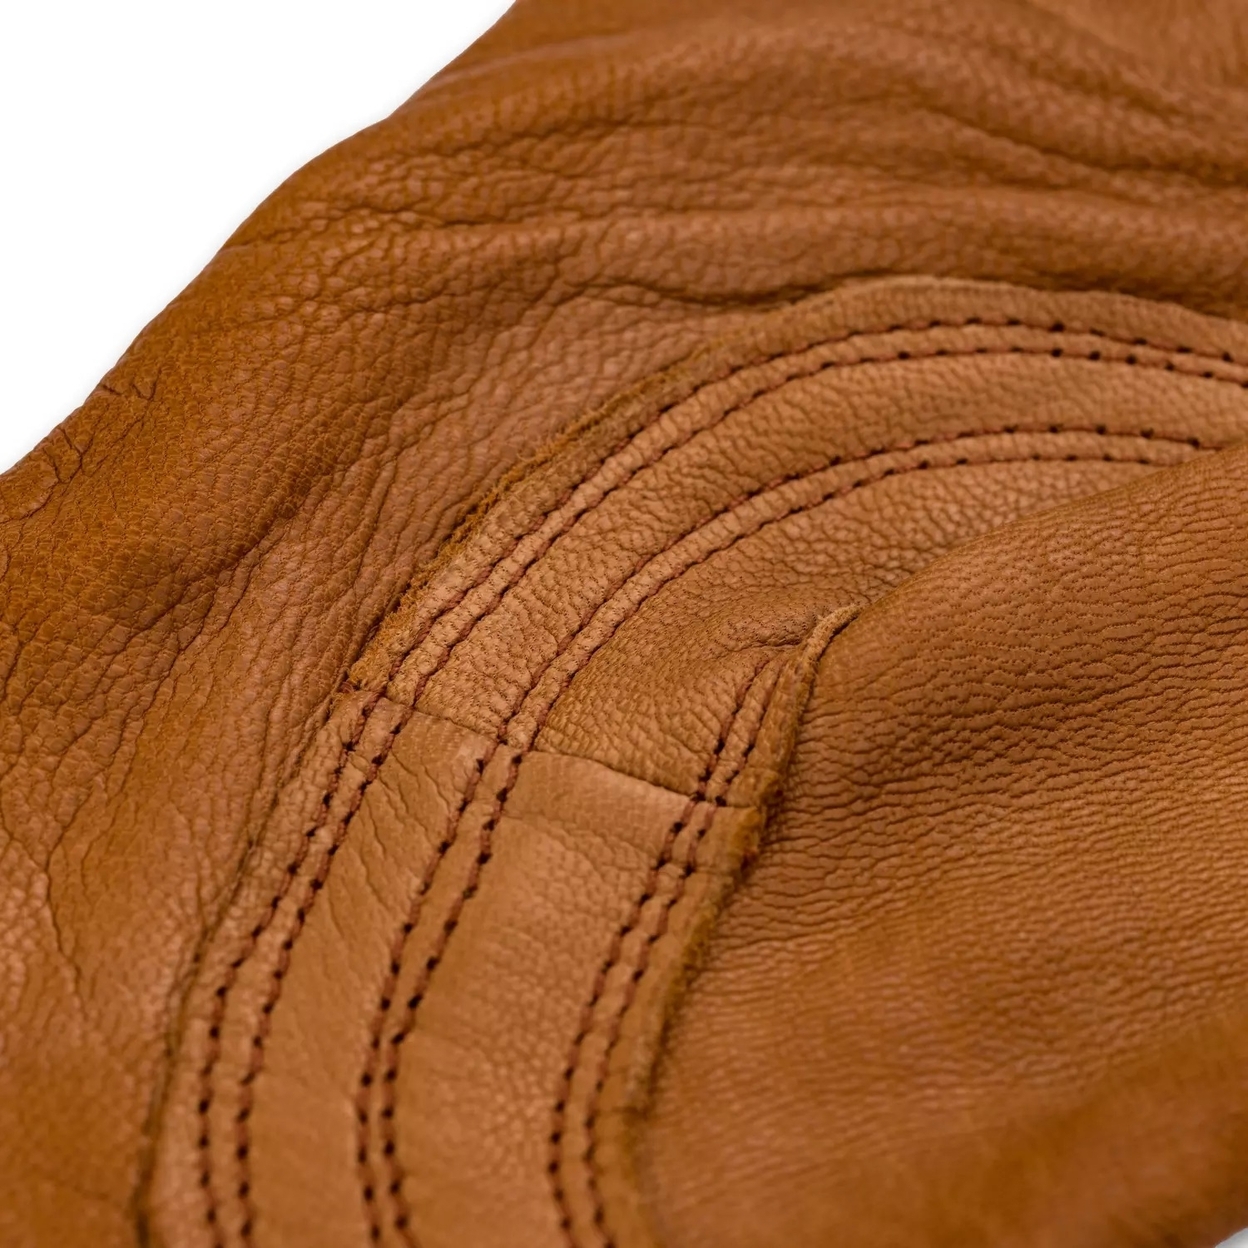 Plainsman Premium Cabretta Brown Leather Gloves, 2 Pairs (Large)